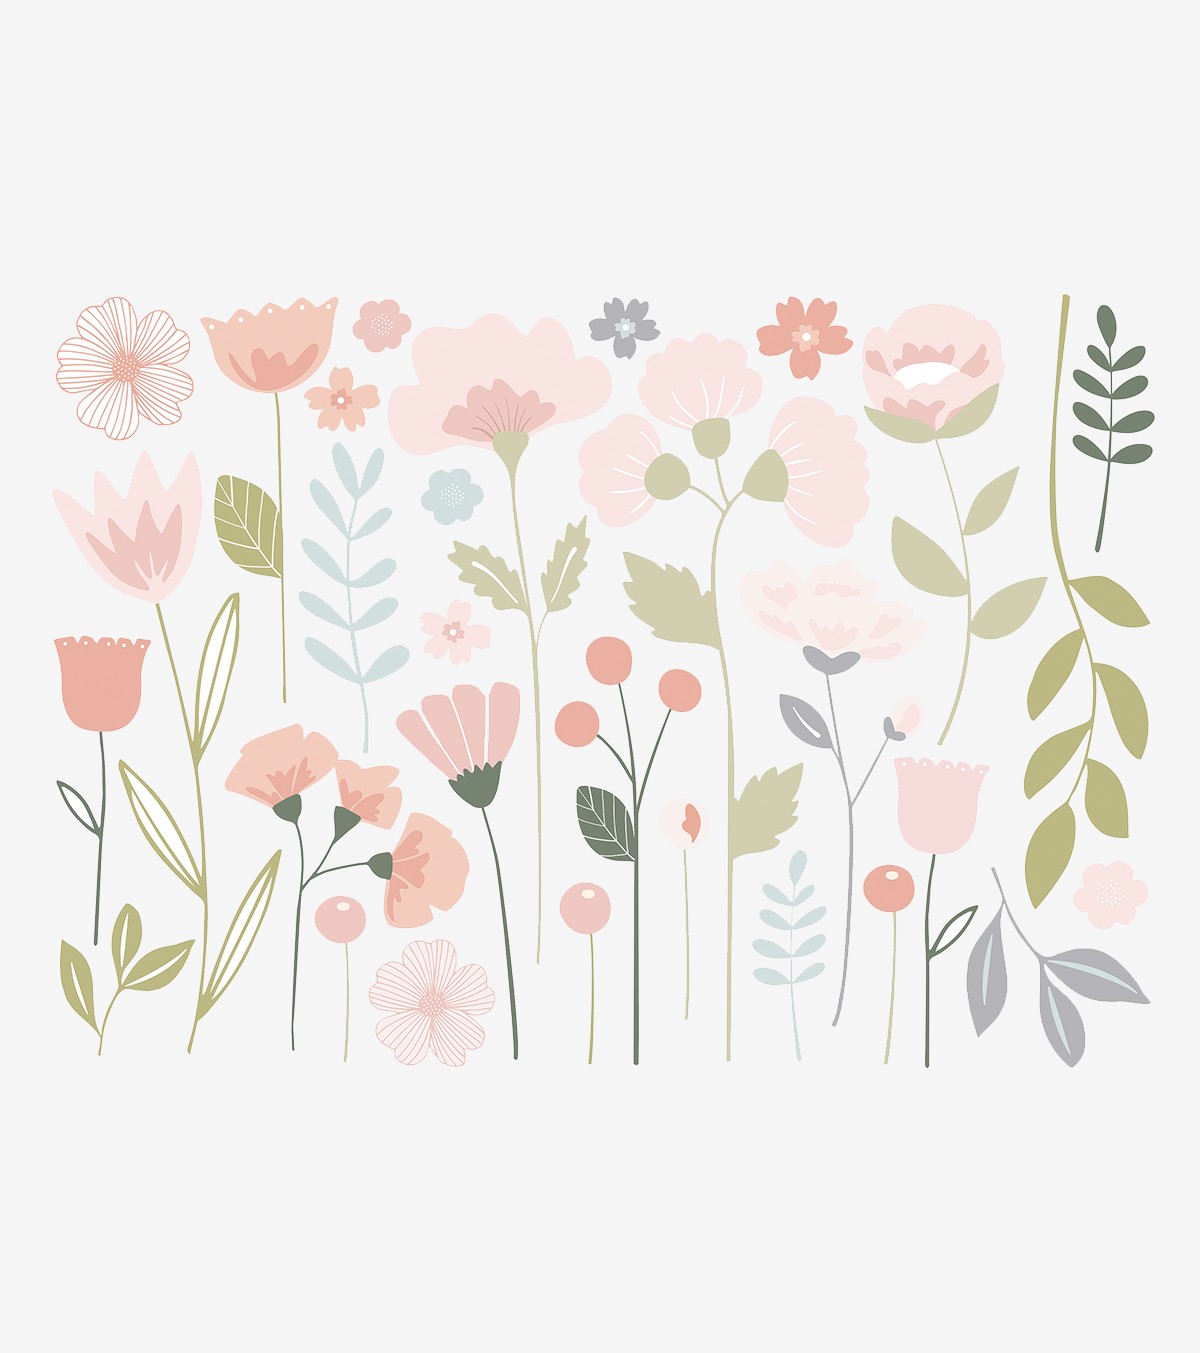 QUEYRAN - Grands stickers - Fleurs sauvages